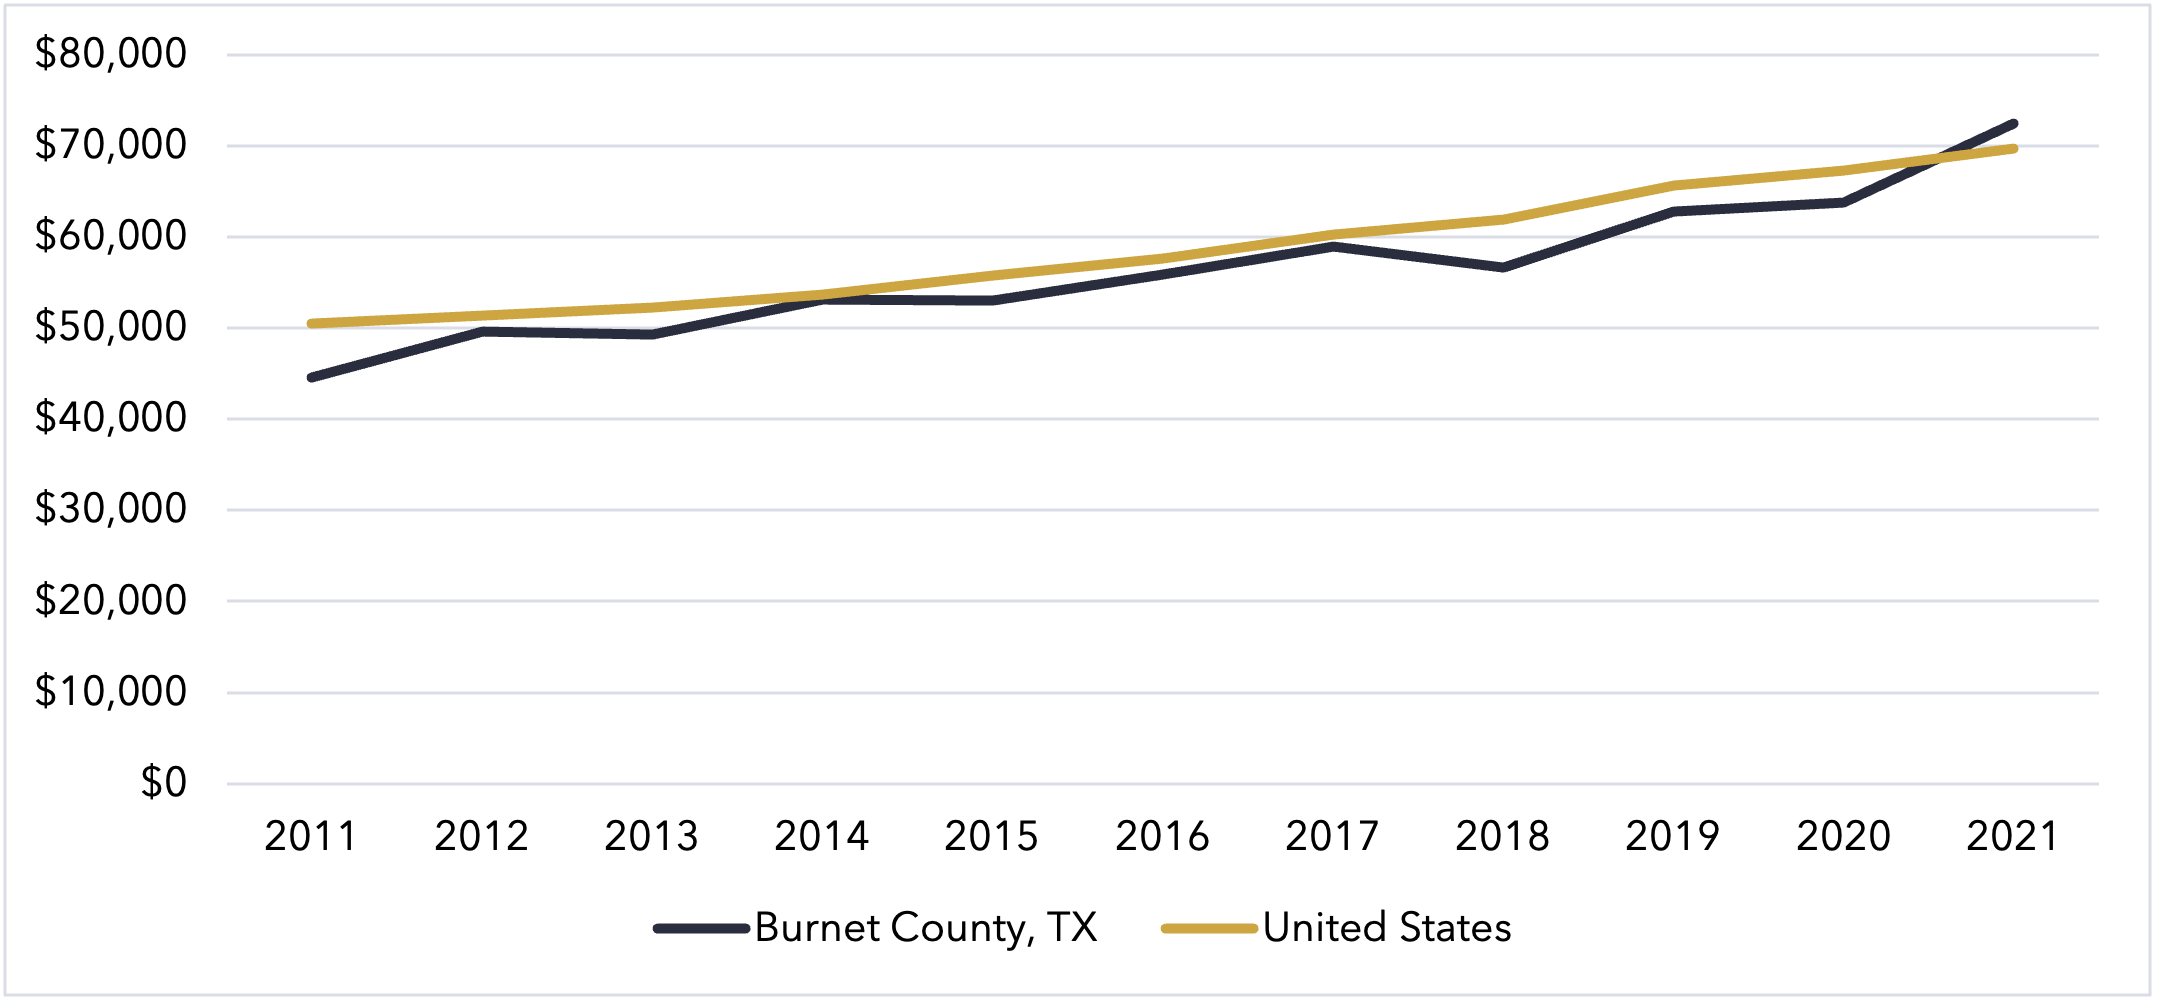 Burnet County, Texas Median Household Income 2021